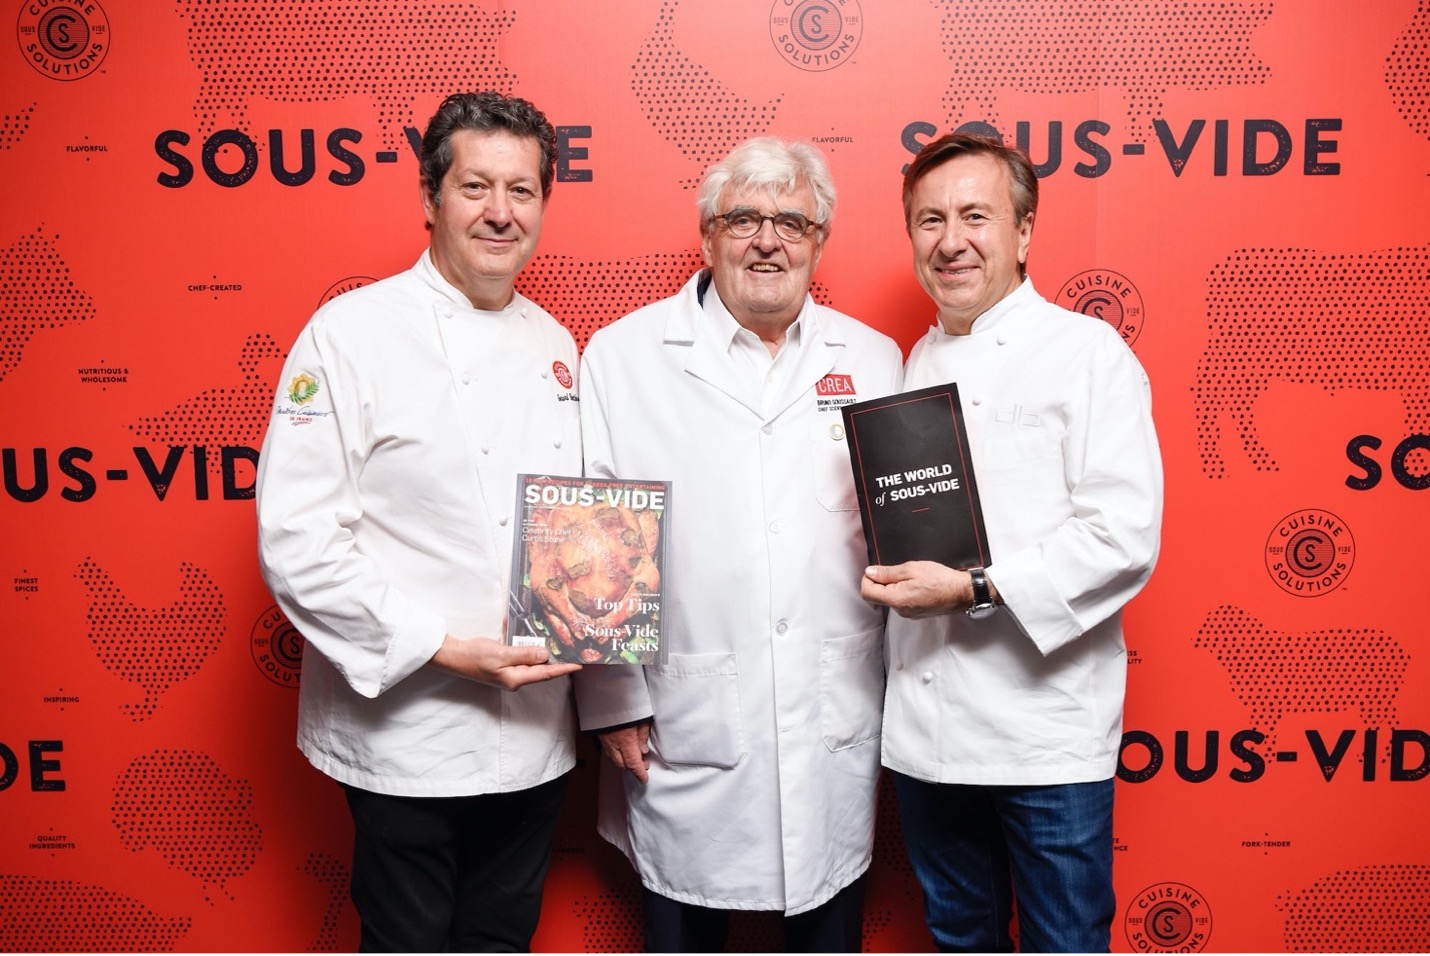 Gerard Bertholon, Dr. Bruno Goussault and Chef Daniel Boulud